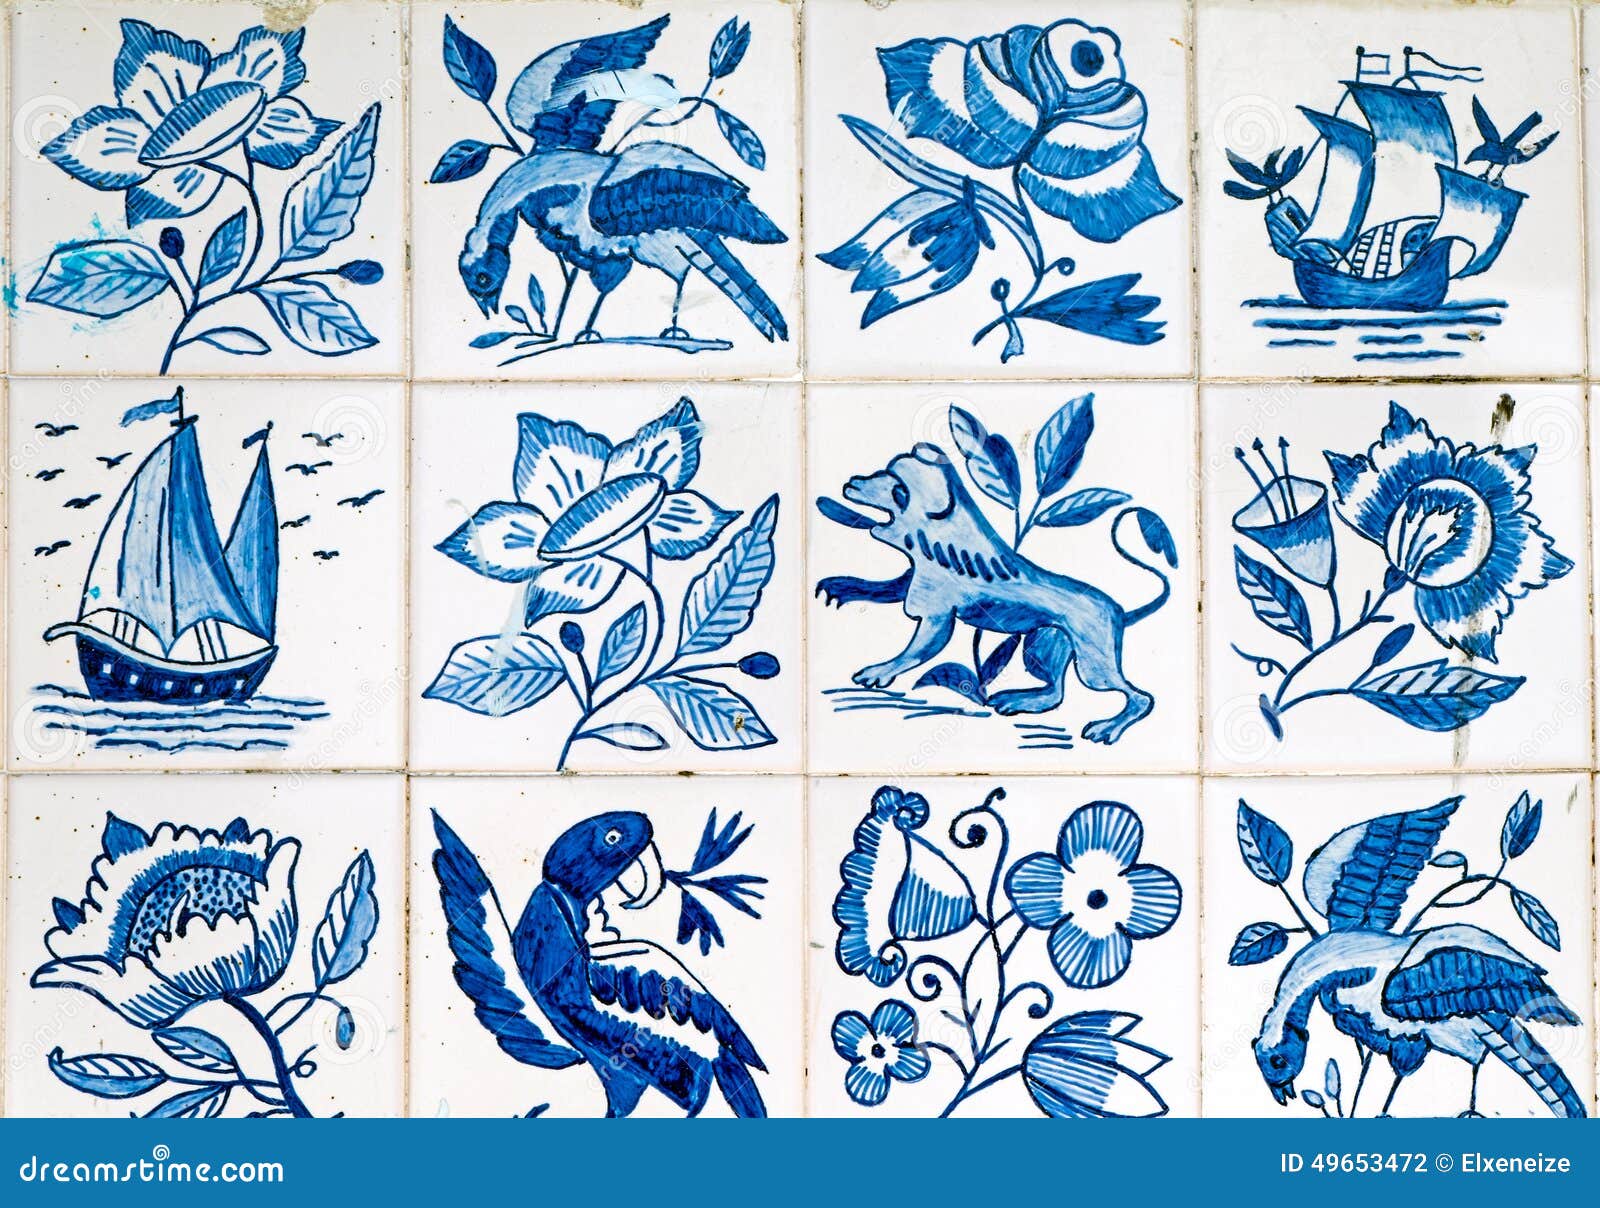 beautiful portuguese tiles